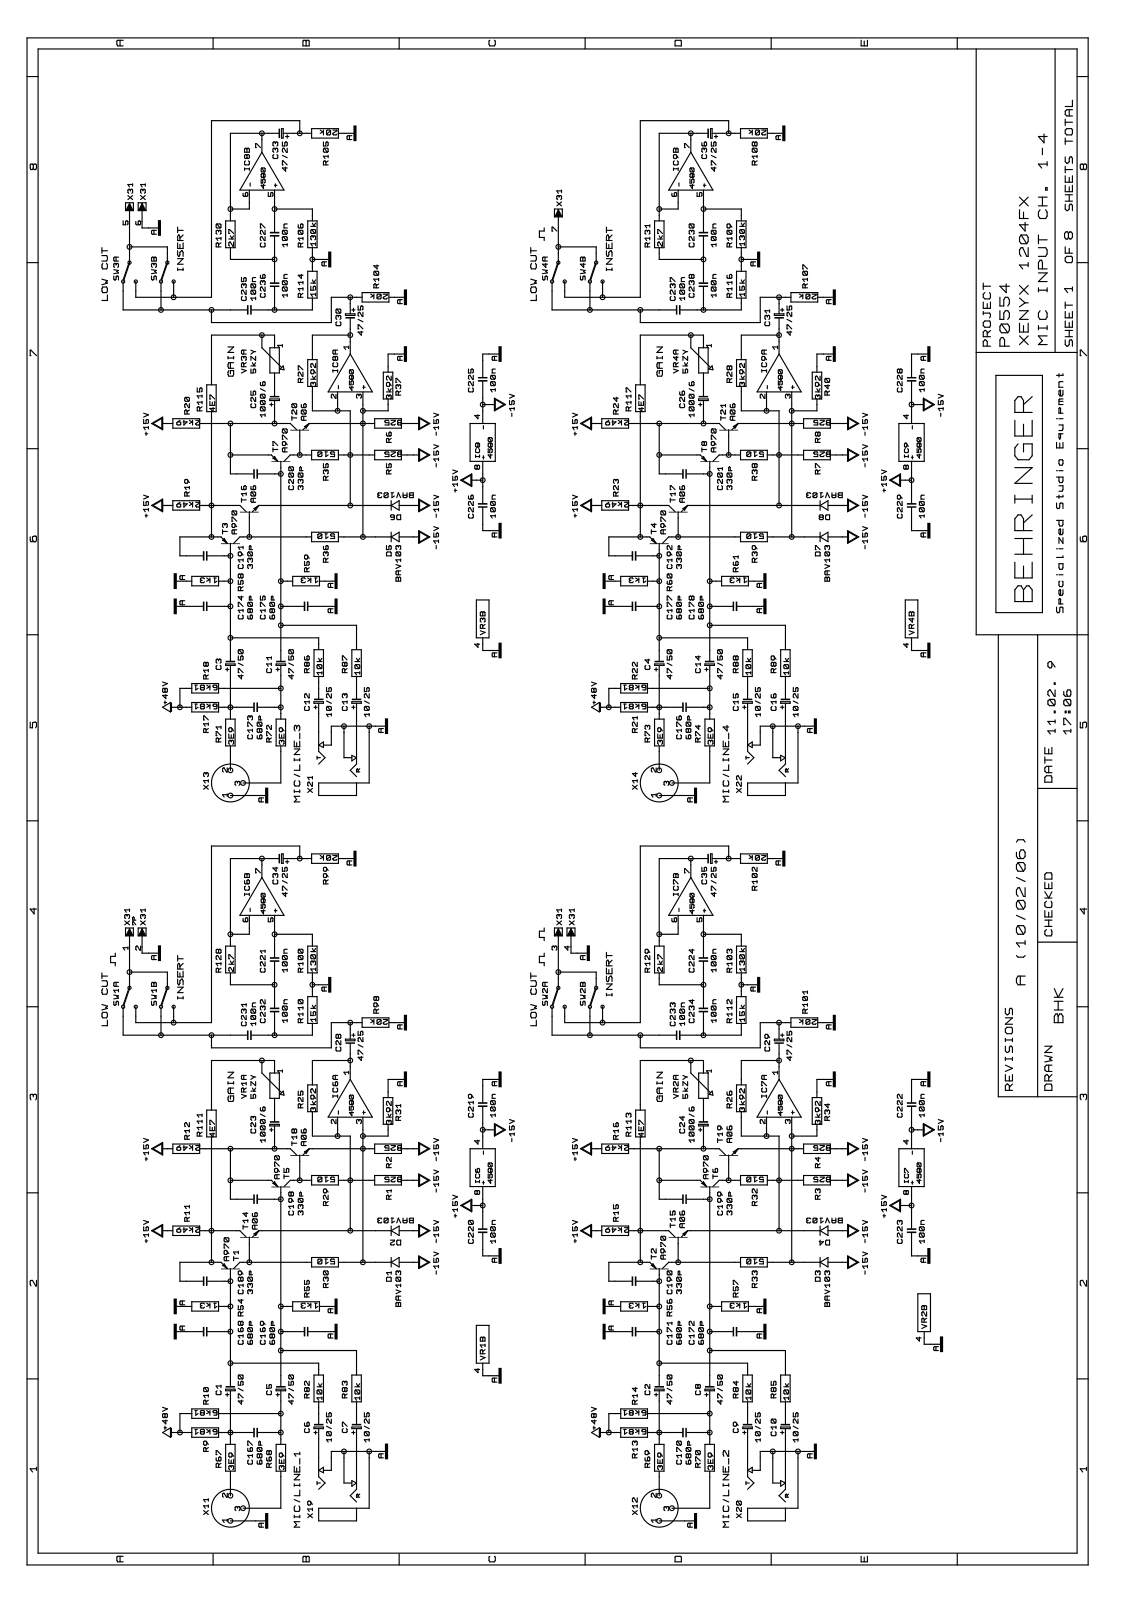 Behringer XENIX-1204-FX Schematic